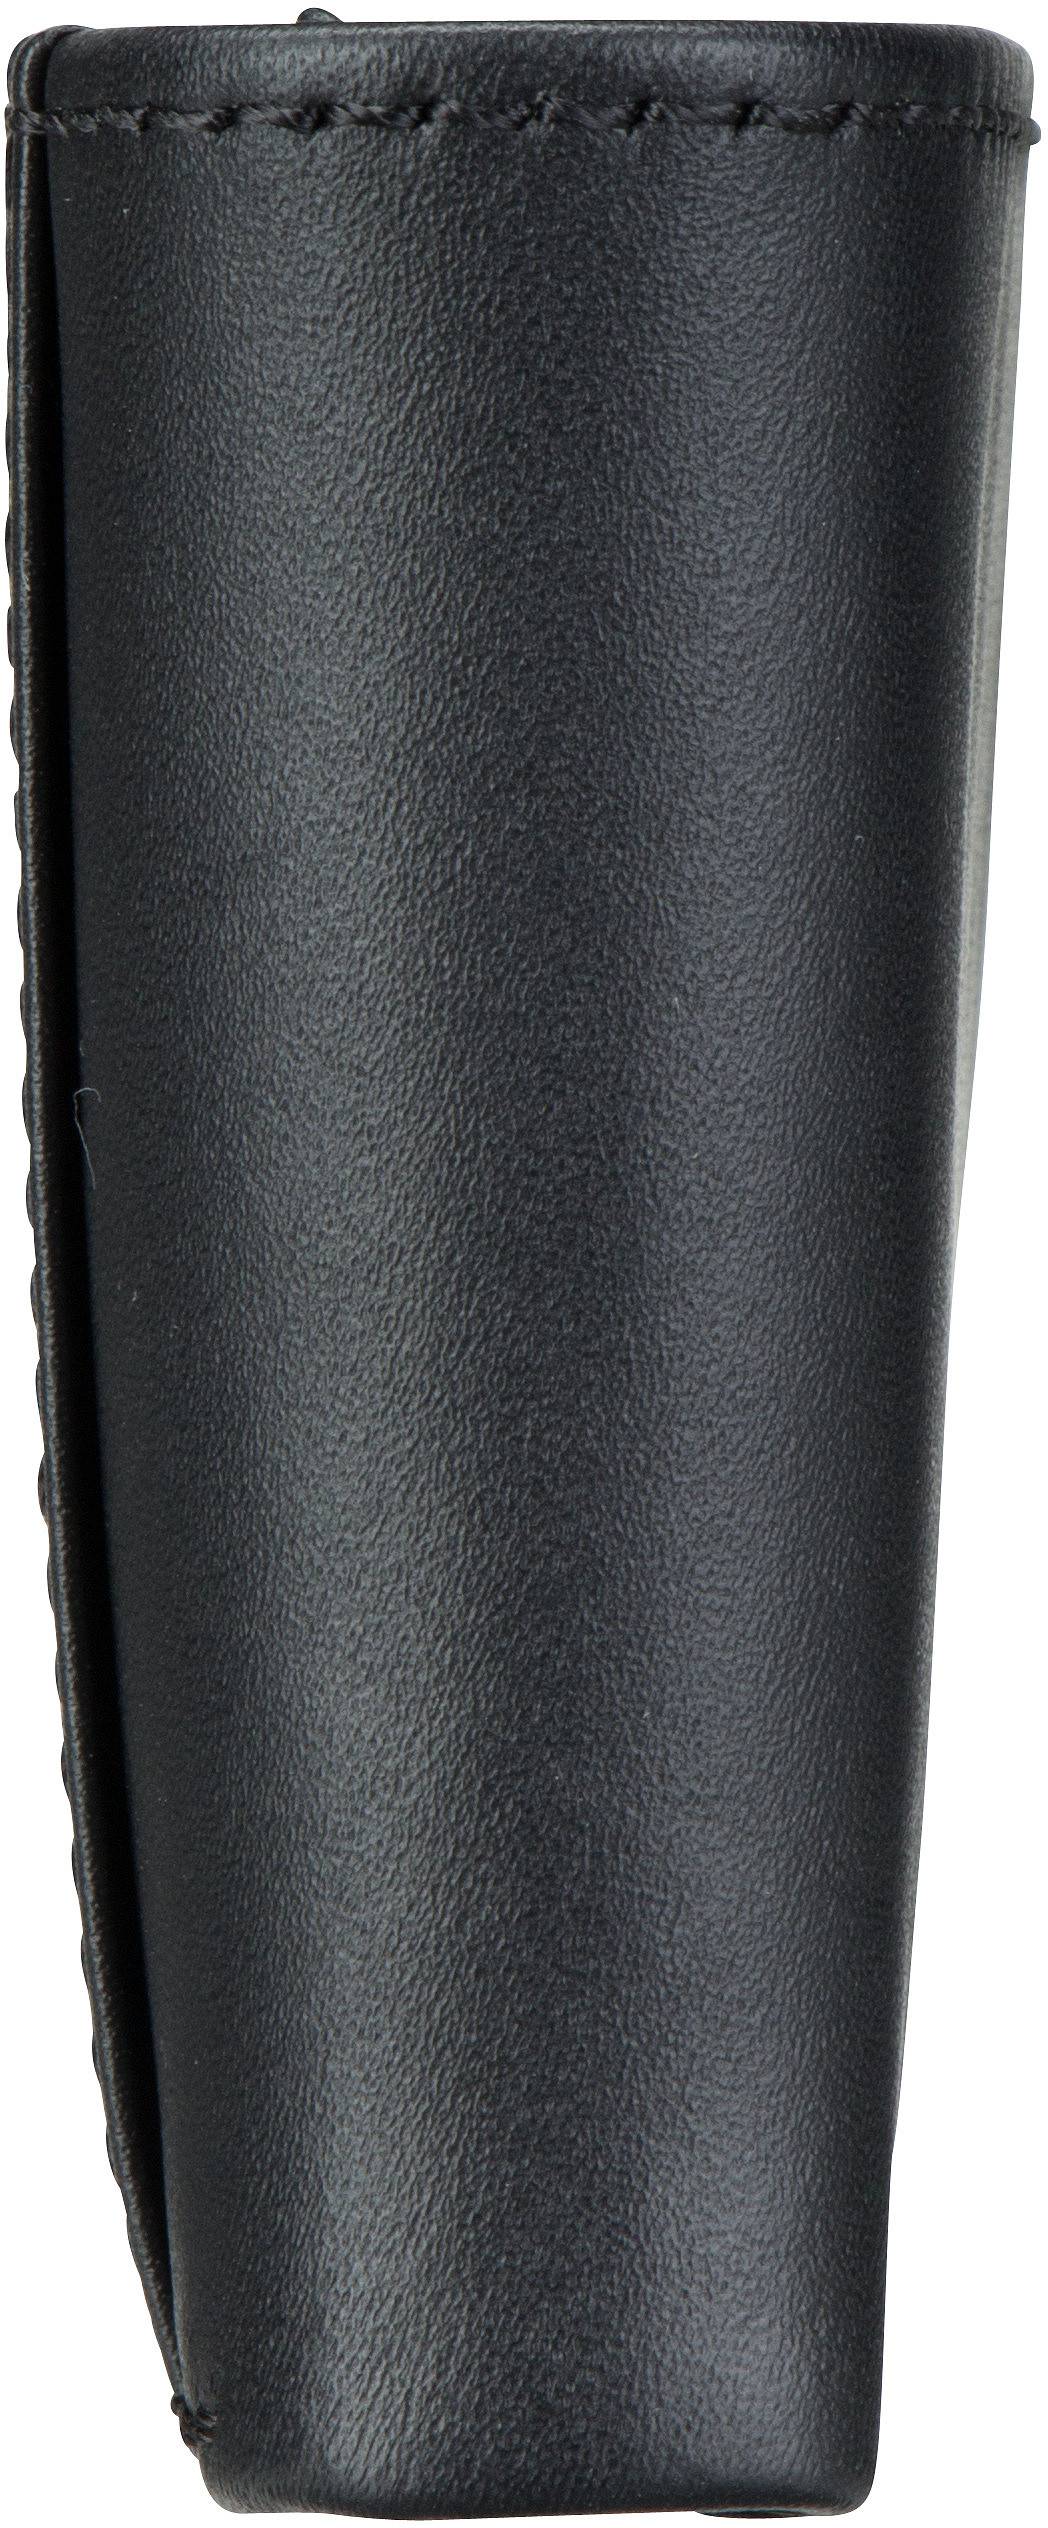 Tommy Hilfiger Eton Mini & Pocket Black Coin Flap CC